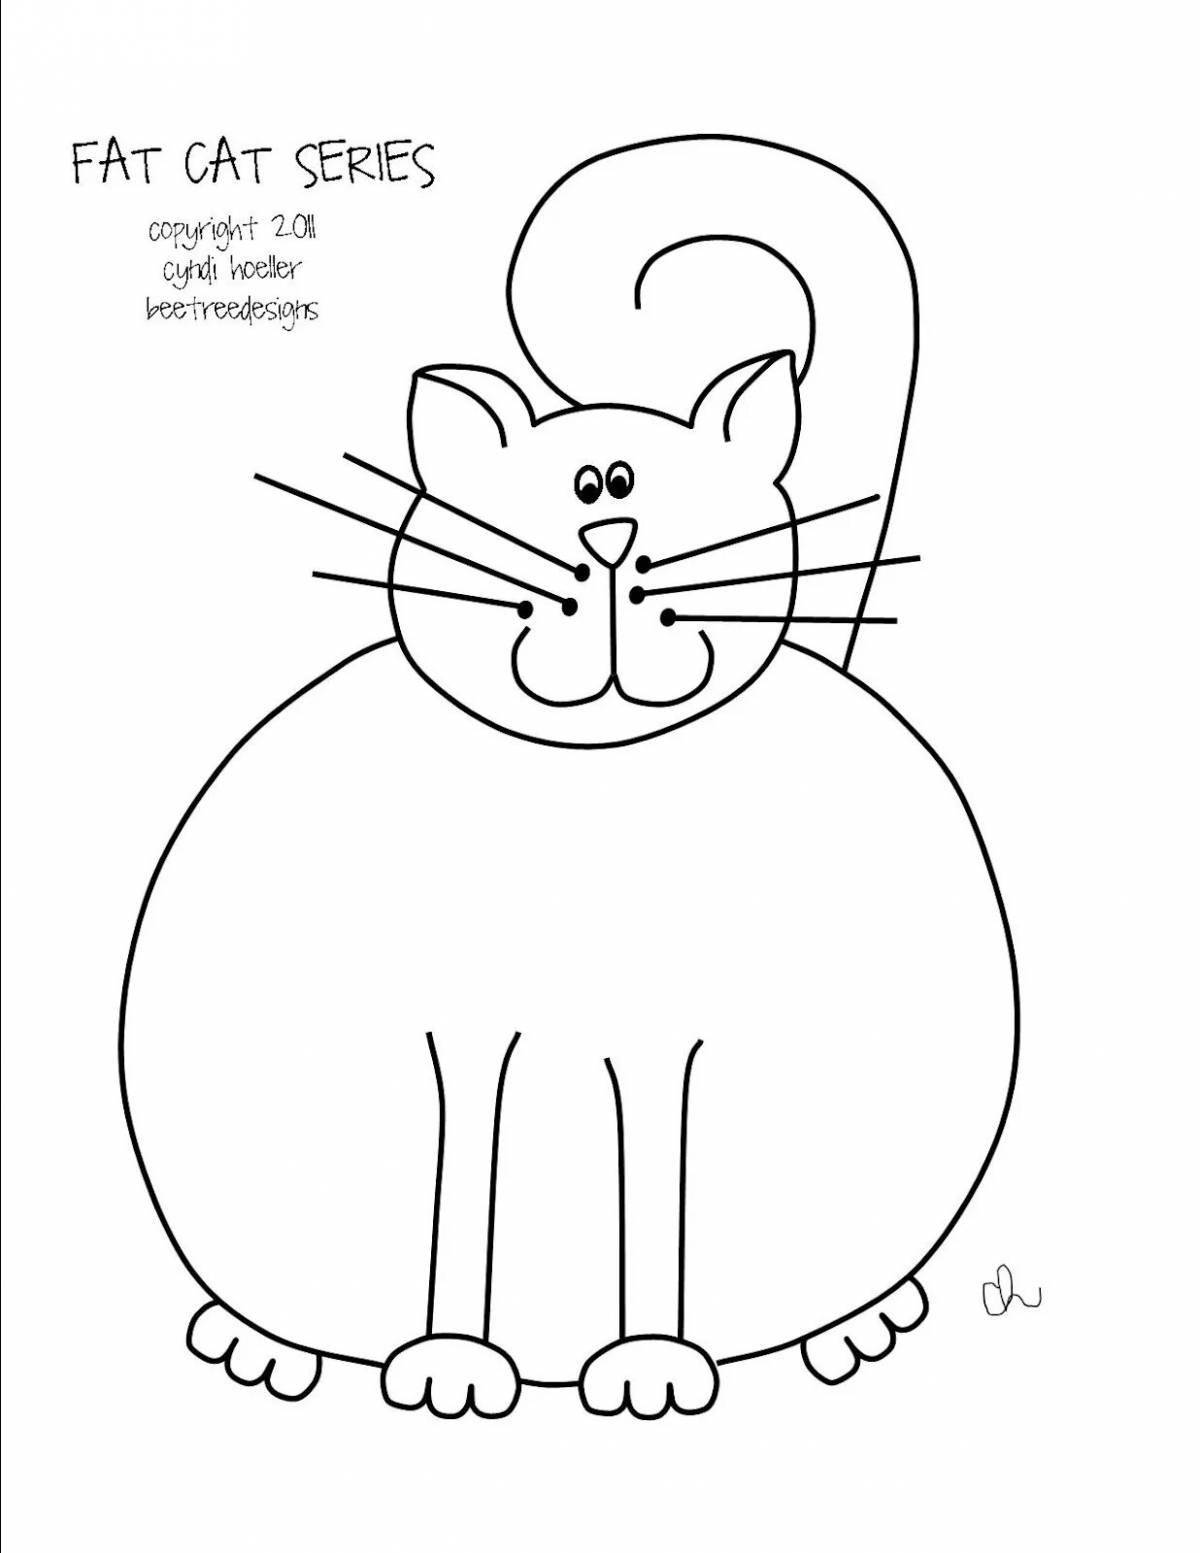 Fat cat #4